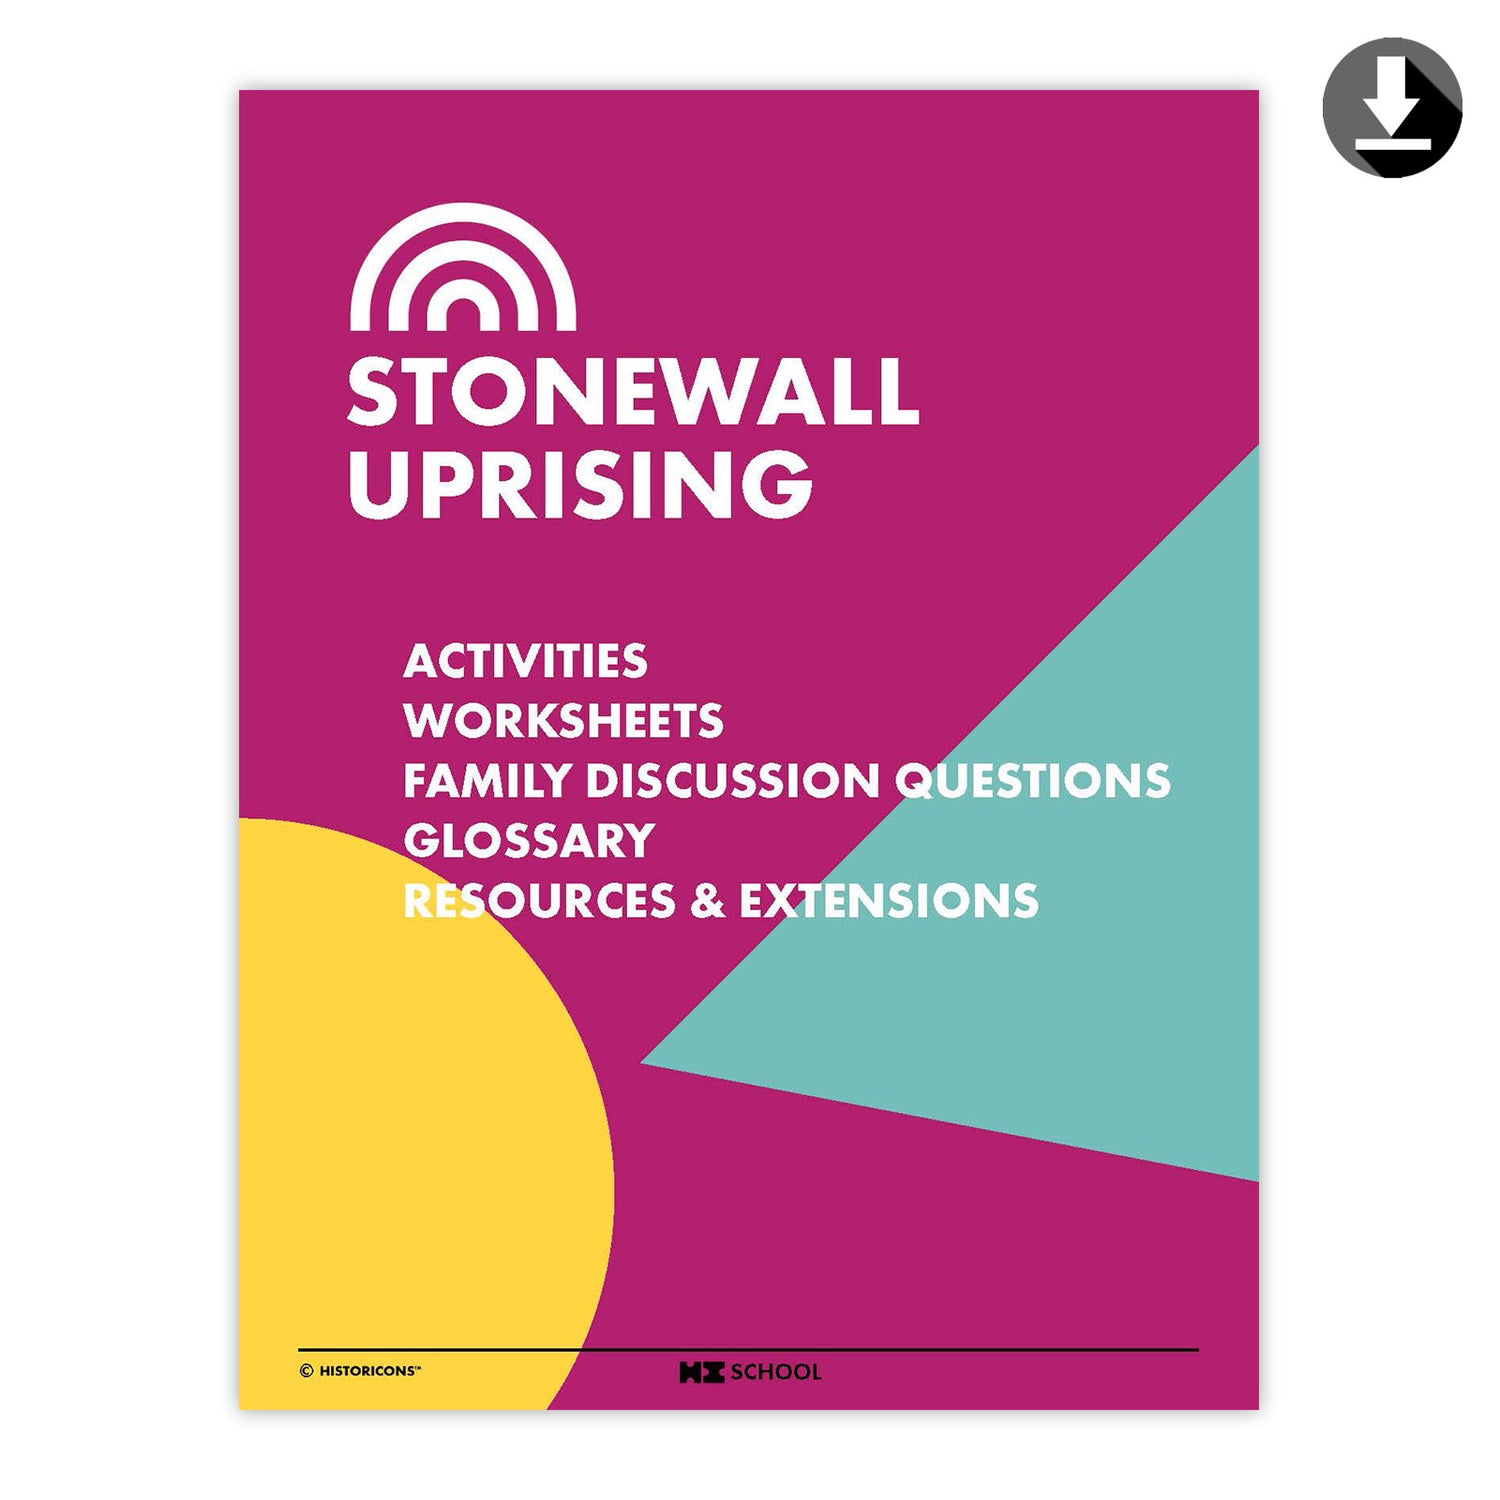 Stonewall Uprising: Resources